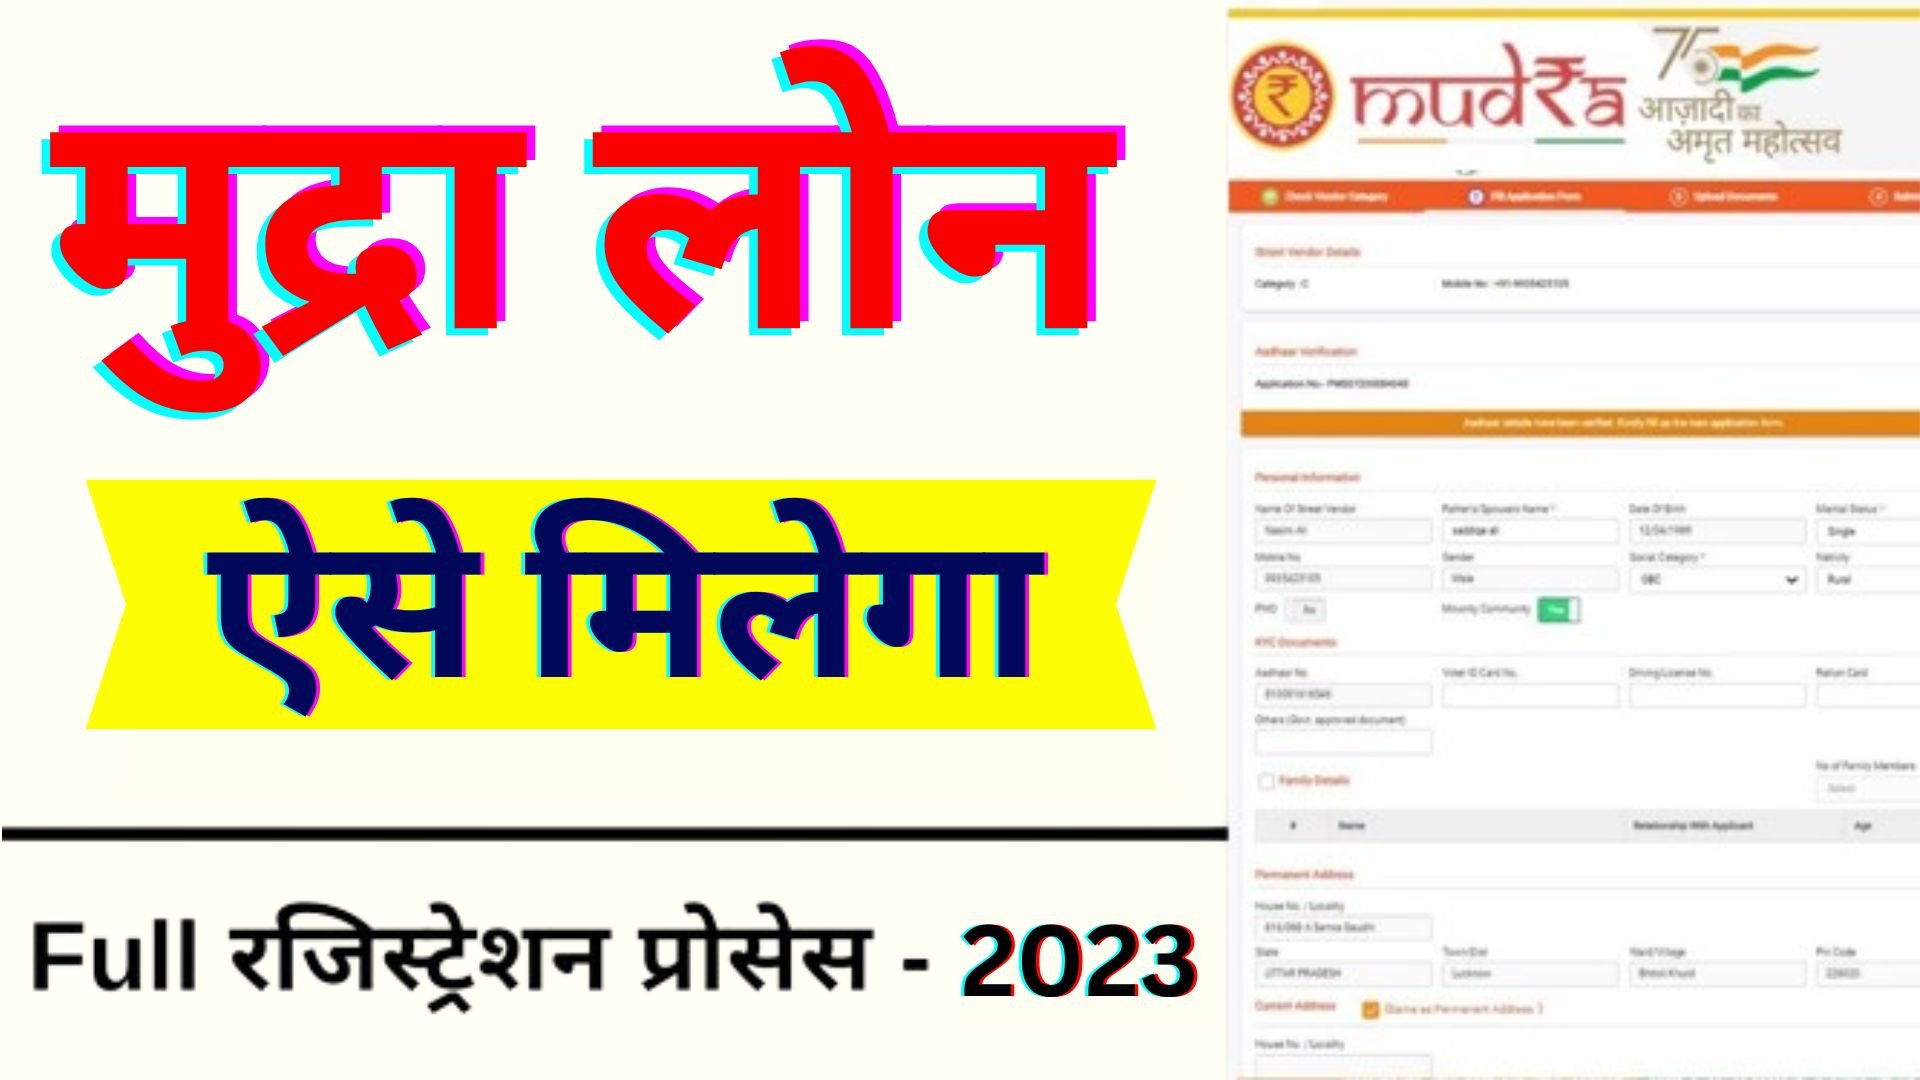 Mudra Loan Online Apply 2023-24: mudra loan online apply kaise kare | Mudra loan PMMY 2023